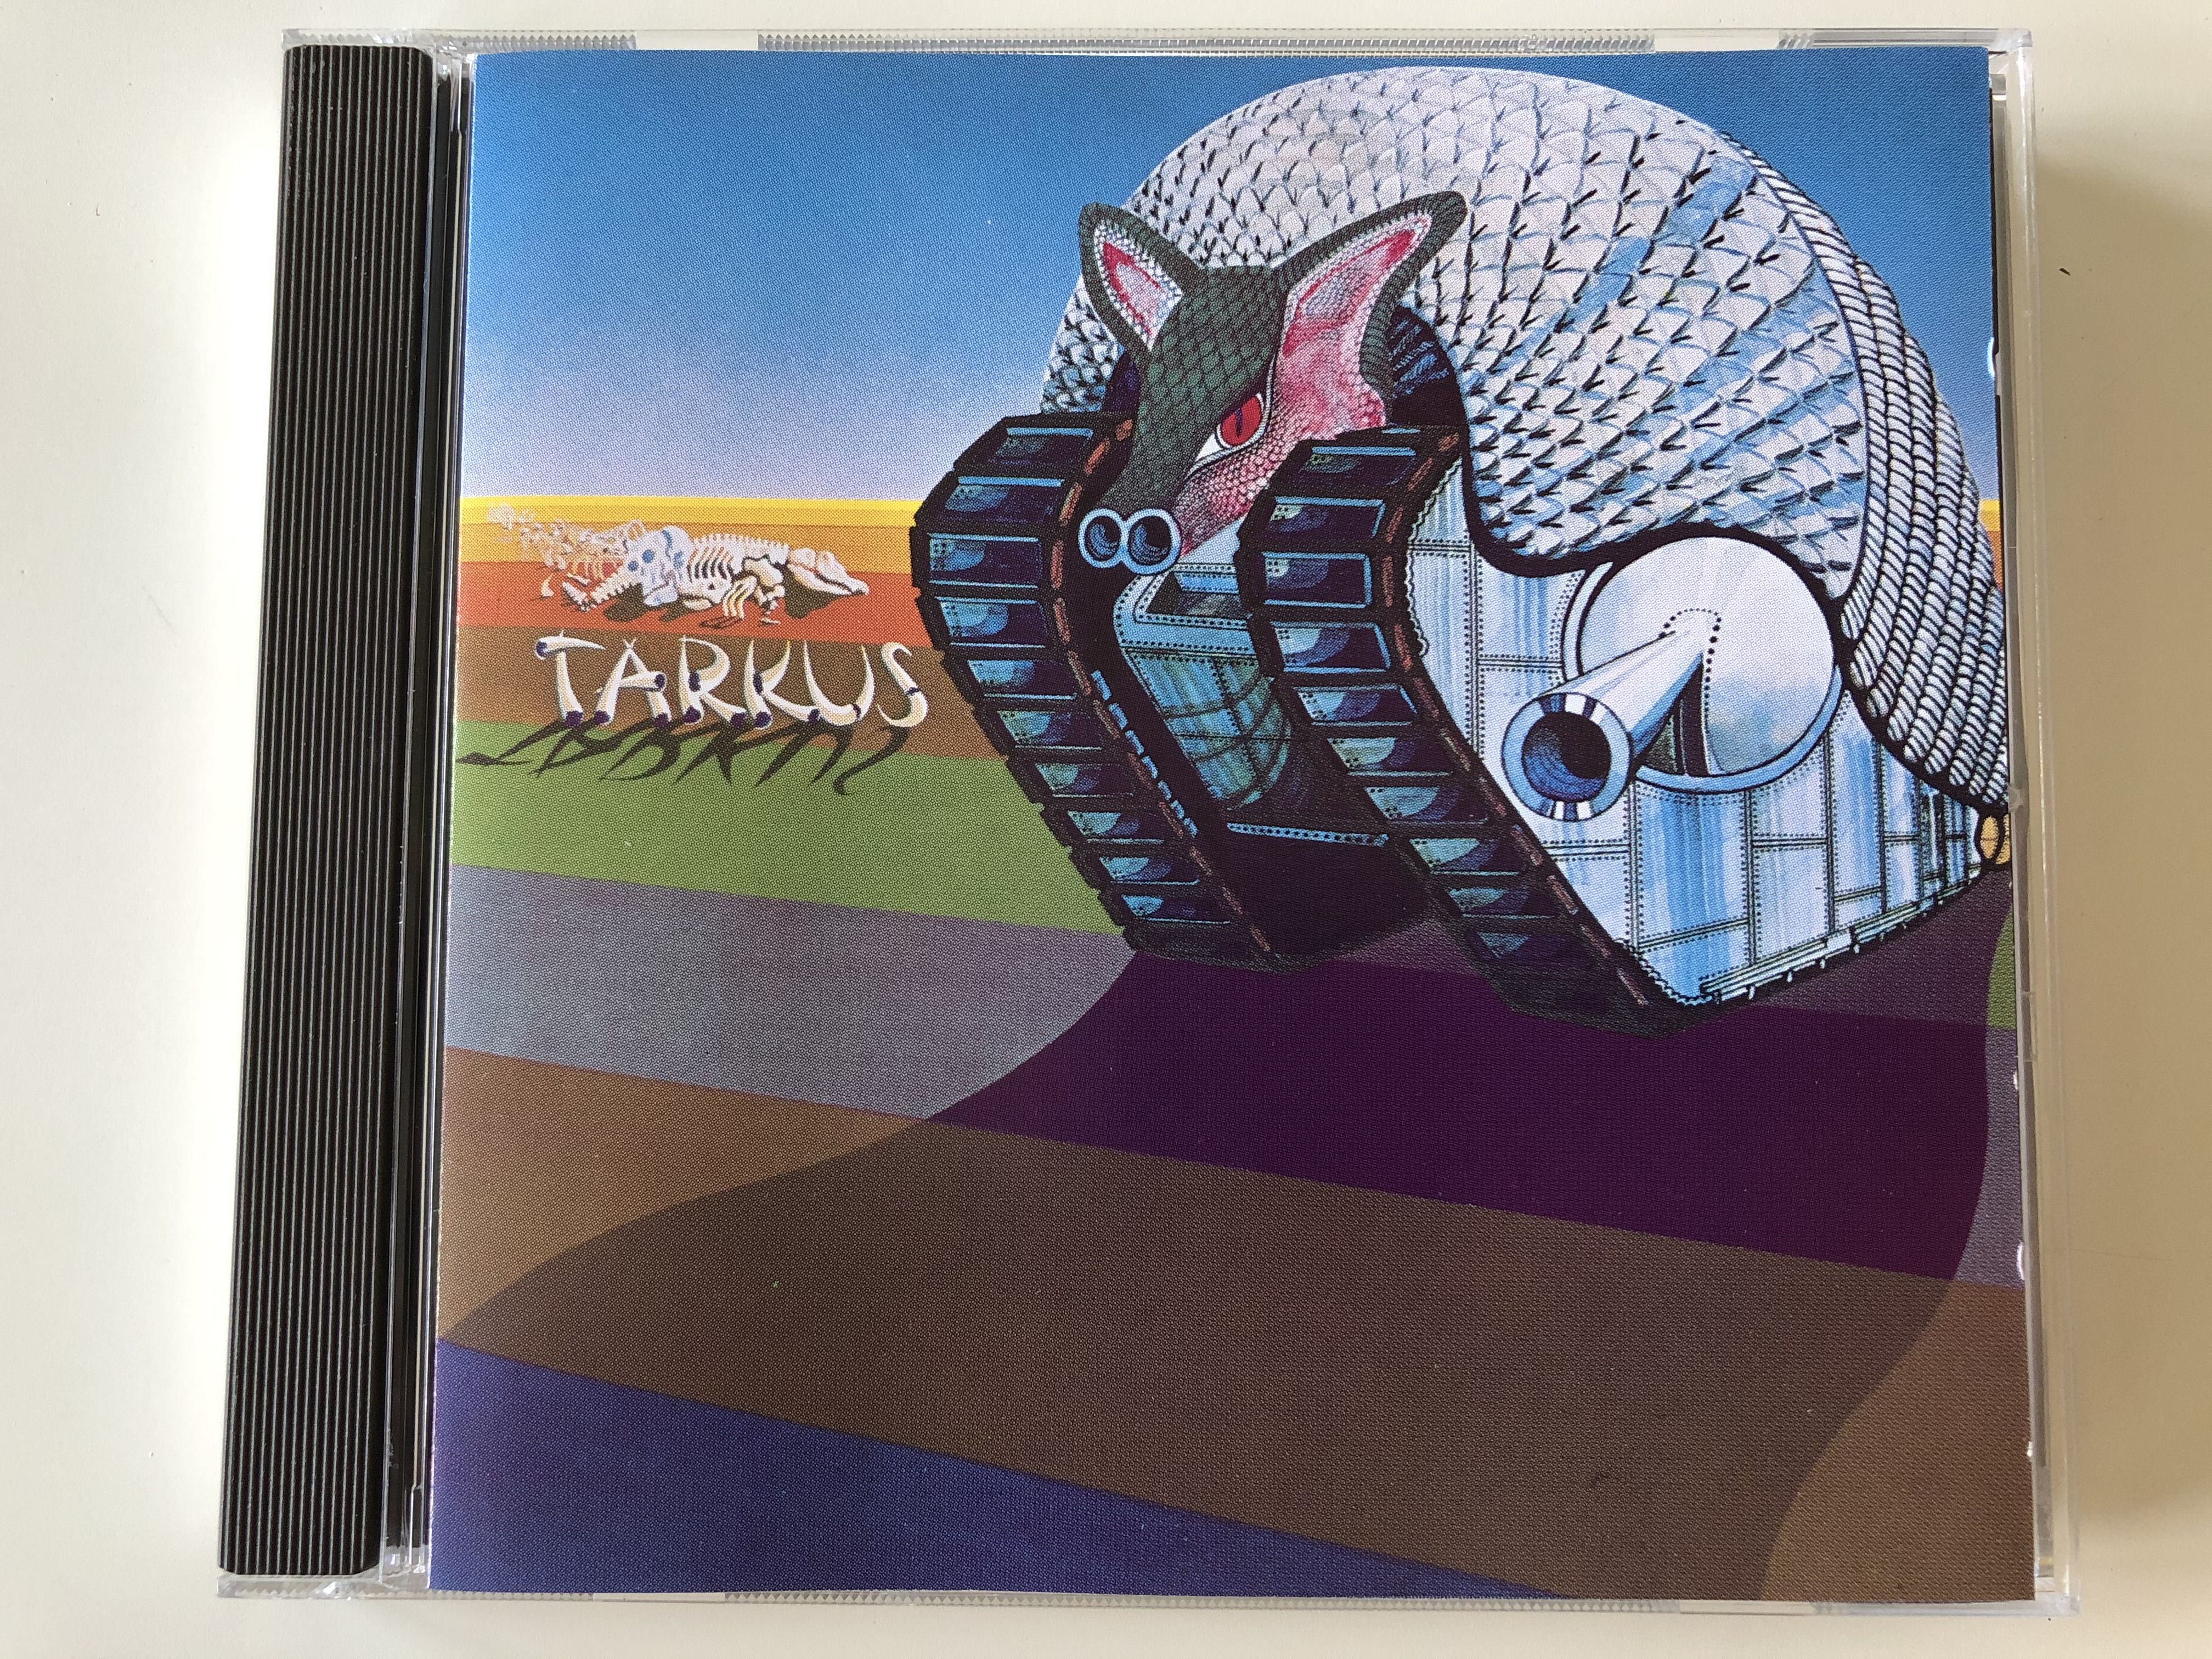 tarkus-atlantic-audio-cd-1971-7567-81520-2-1-.jpg